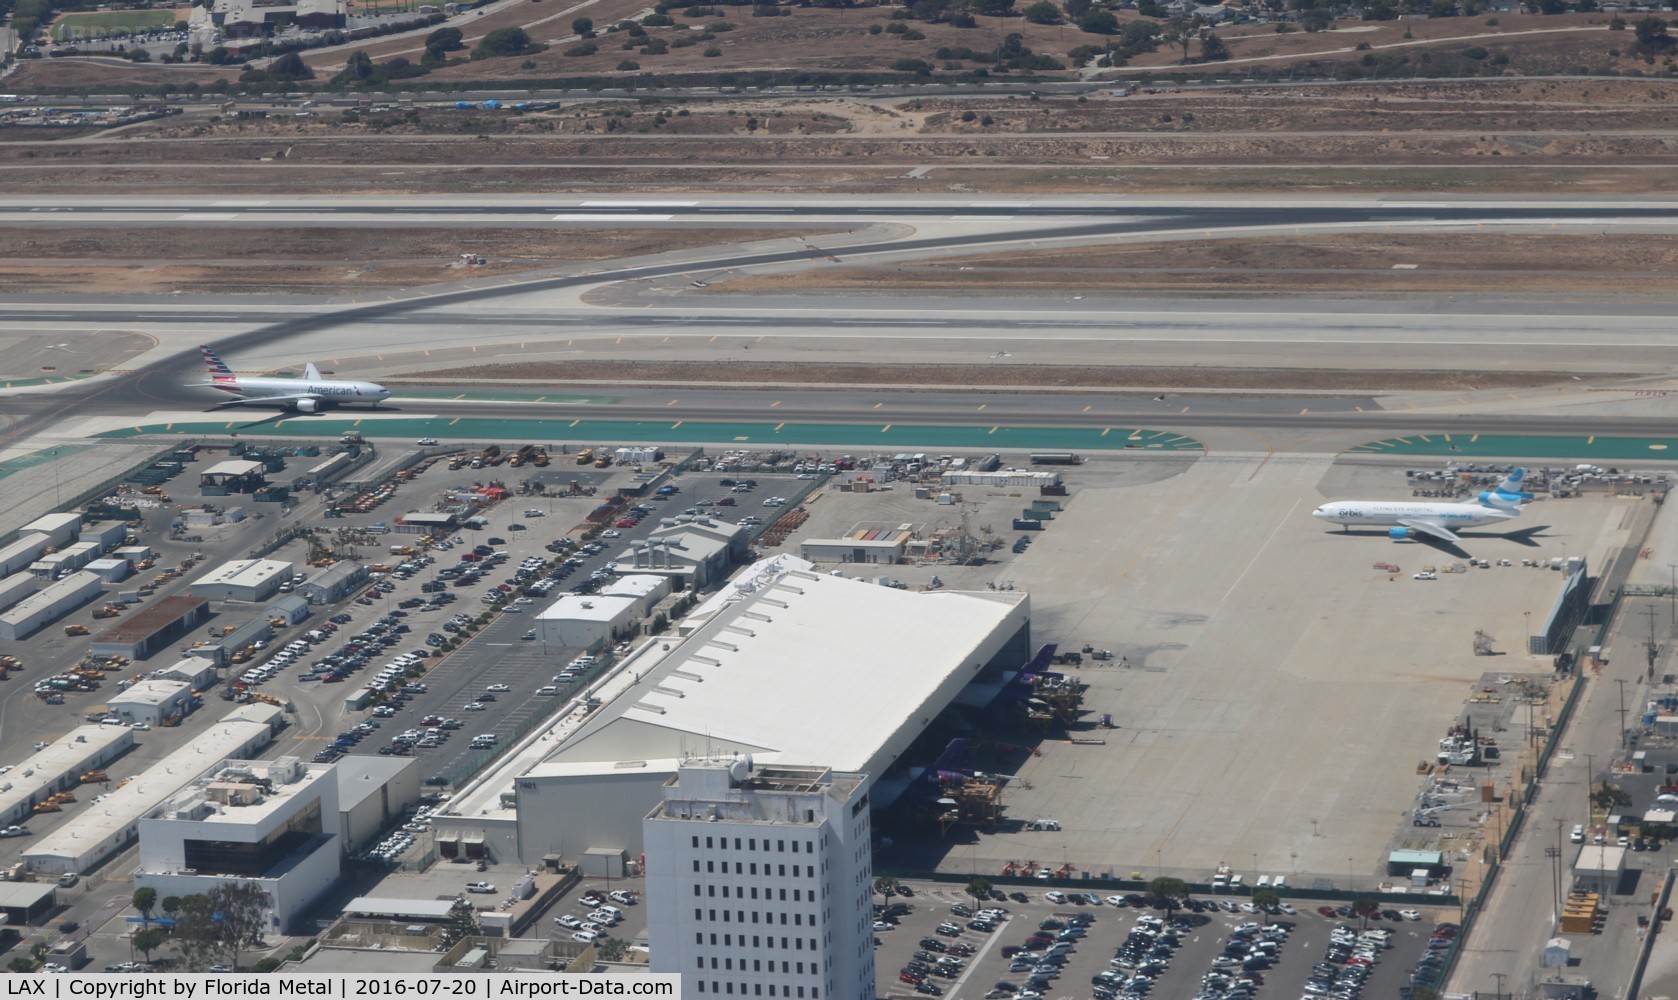 Los Angeles International Airport (LAX) - LAX hangar area